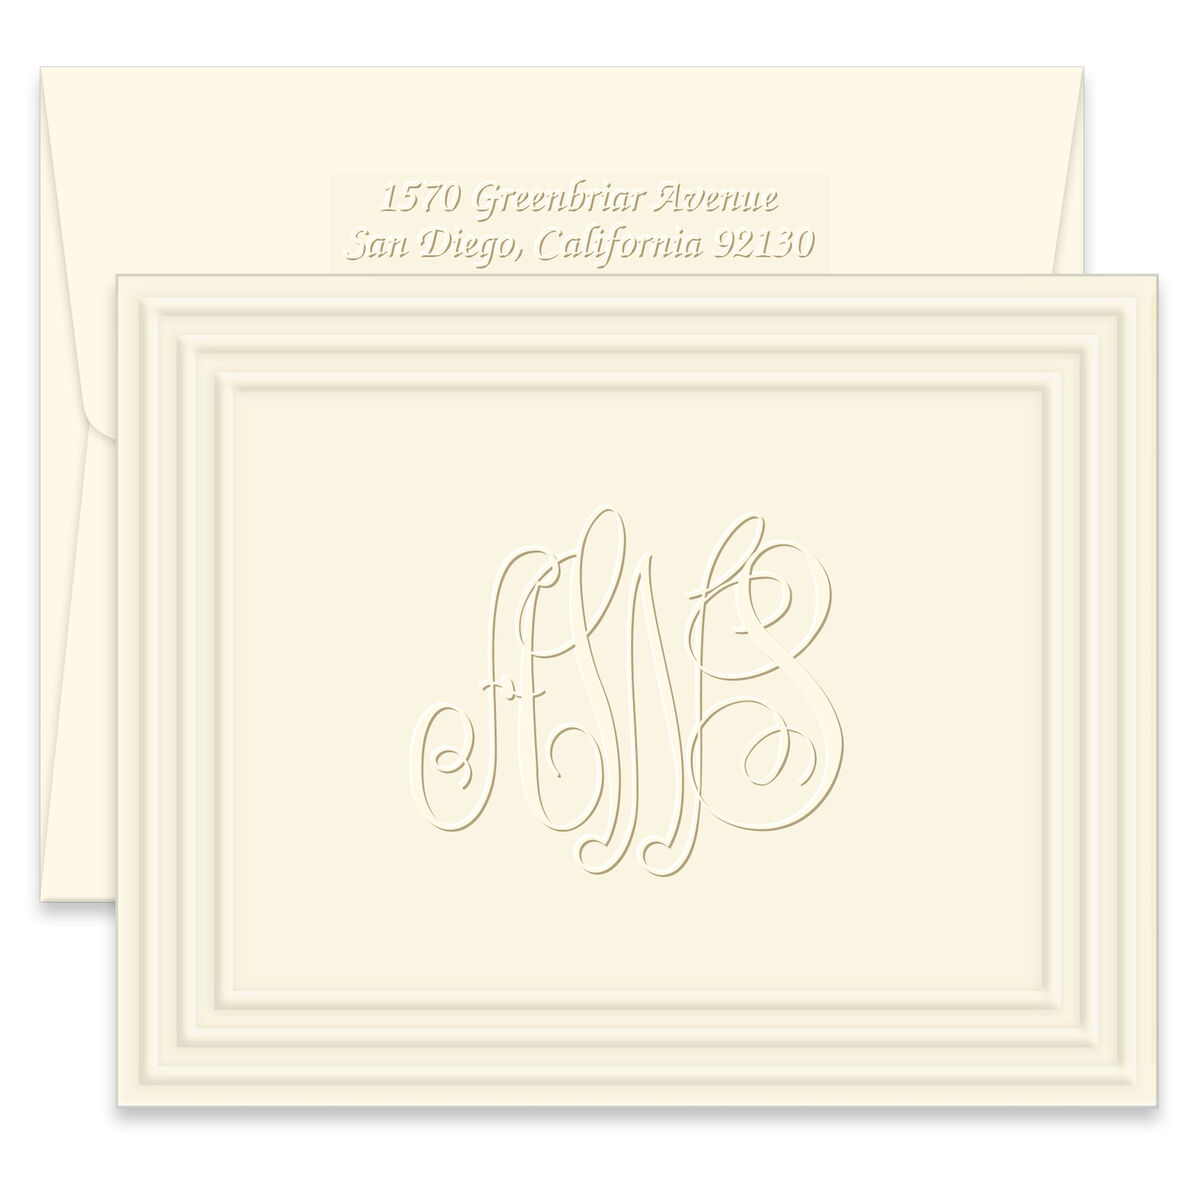 Blank Inside Grey Envelopes Modern Wide Stripe Design |Bulk Set Note Card Café Monogram Navy ‘R’ Letter Cards Stationery Personalized Greeting Thank You Glossy Finish 24 Pack